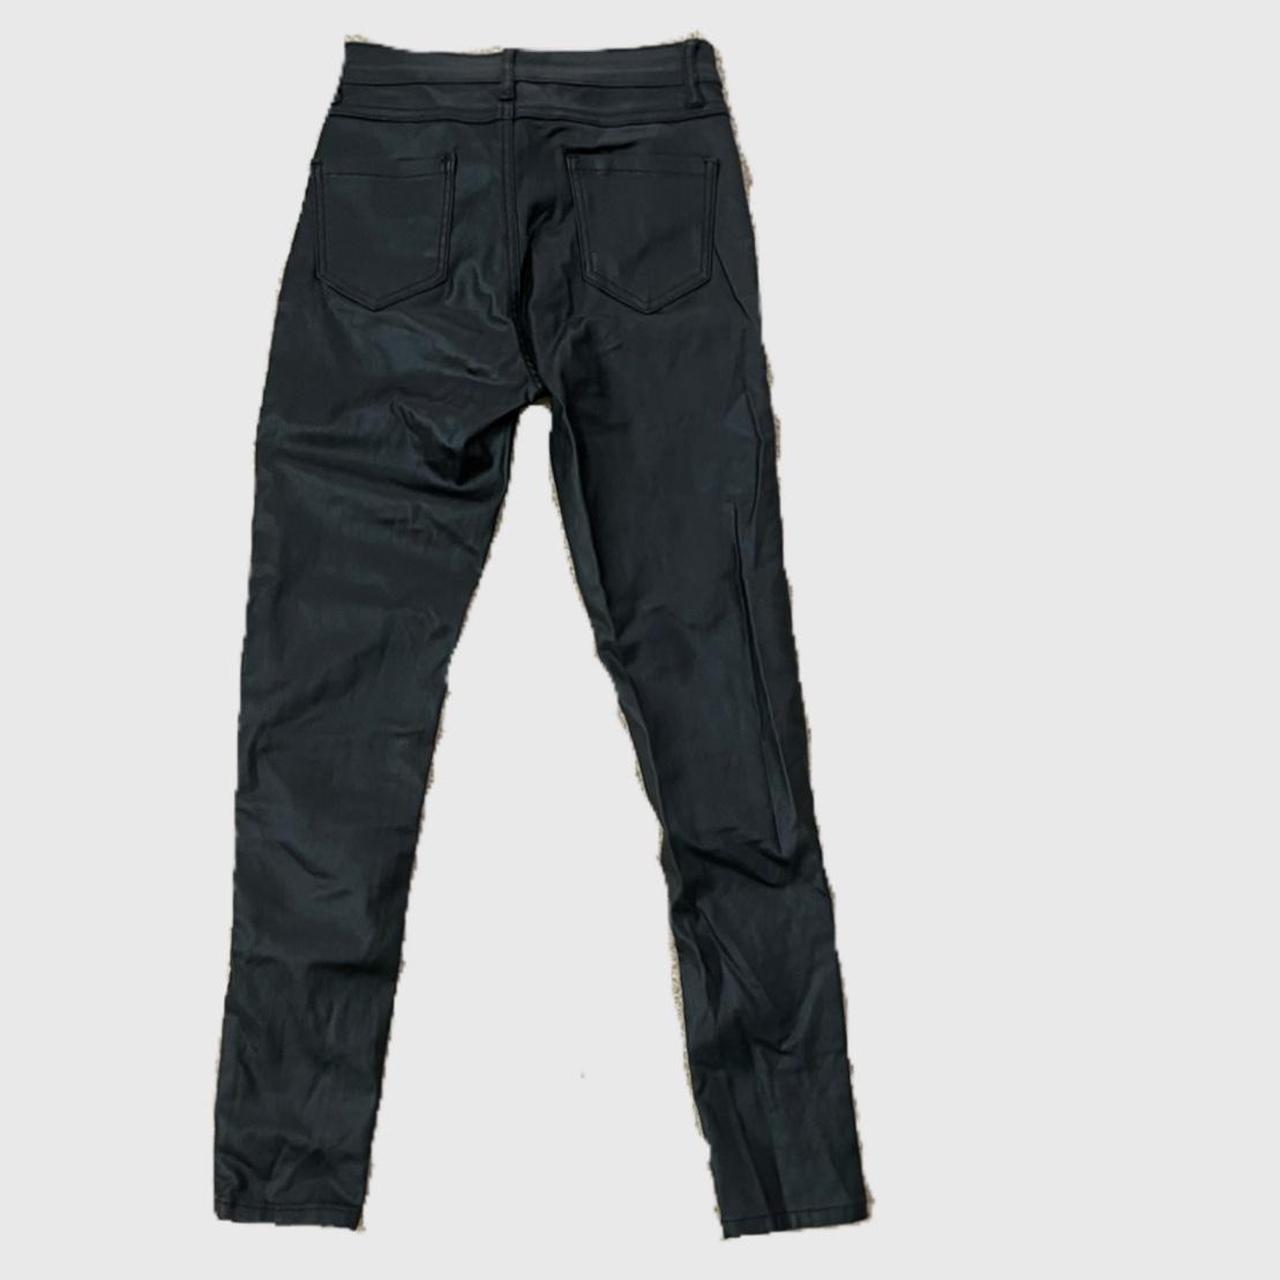 Black faux leather skinny pants! From Adika size... - Depop